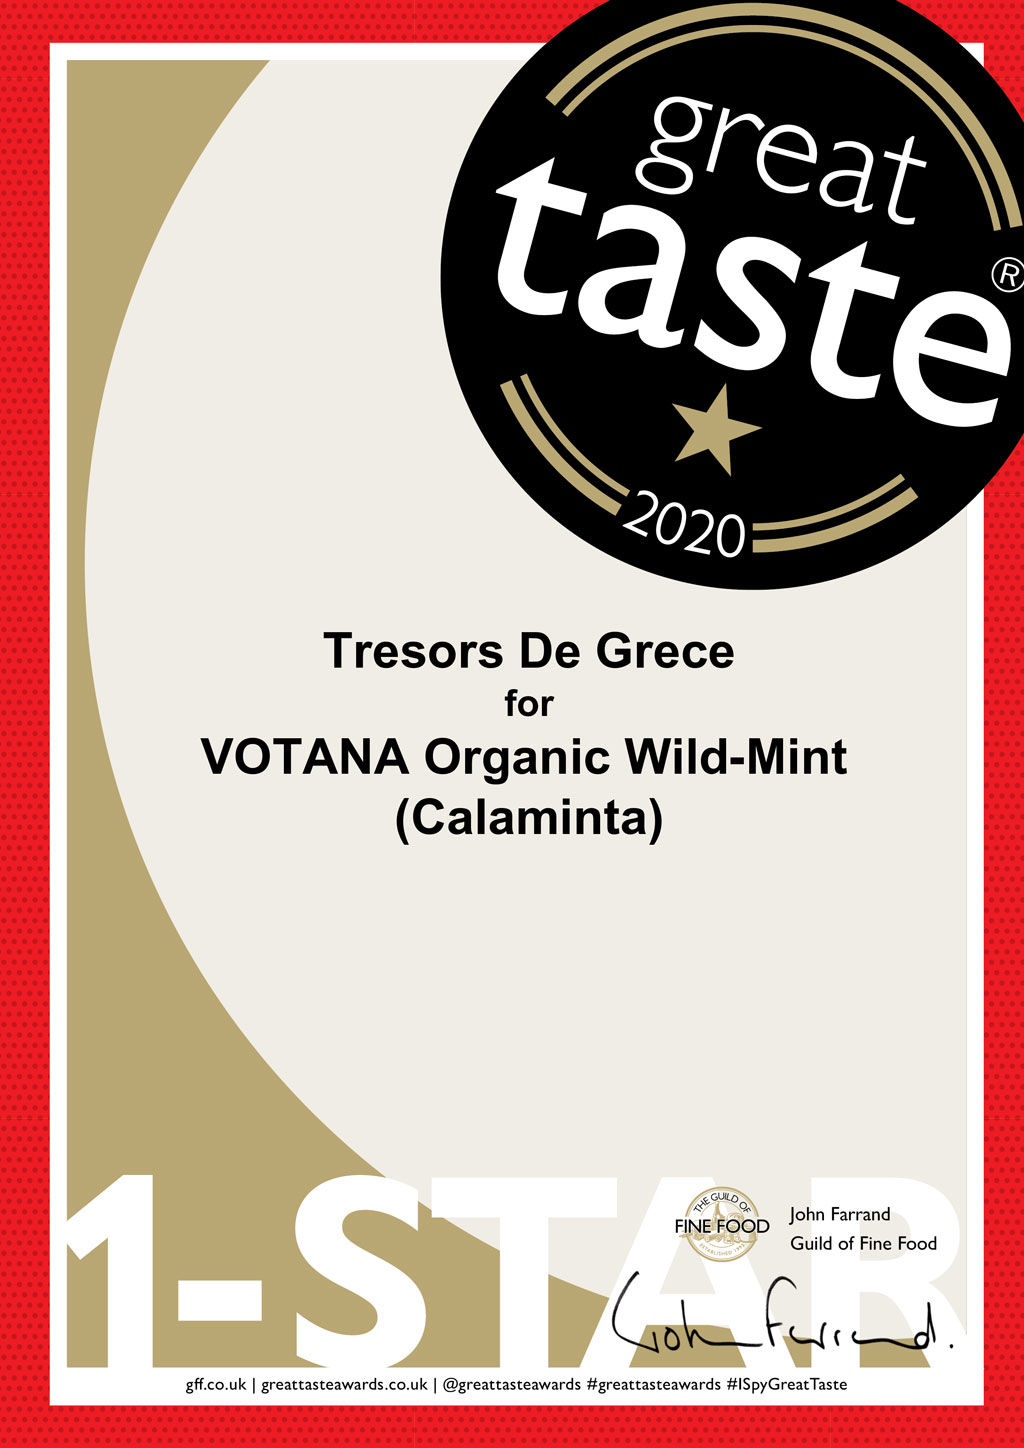 VOTANA Organic Wild Mint 1 star Awards & Media